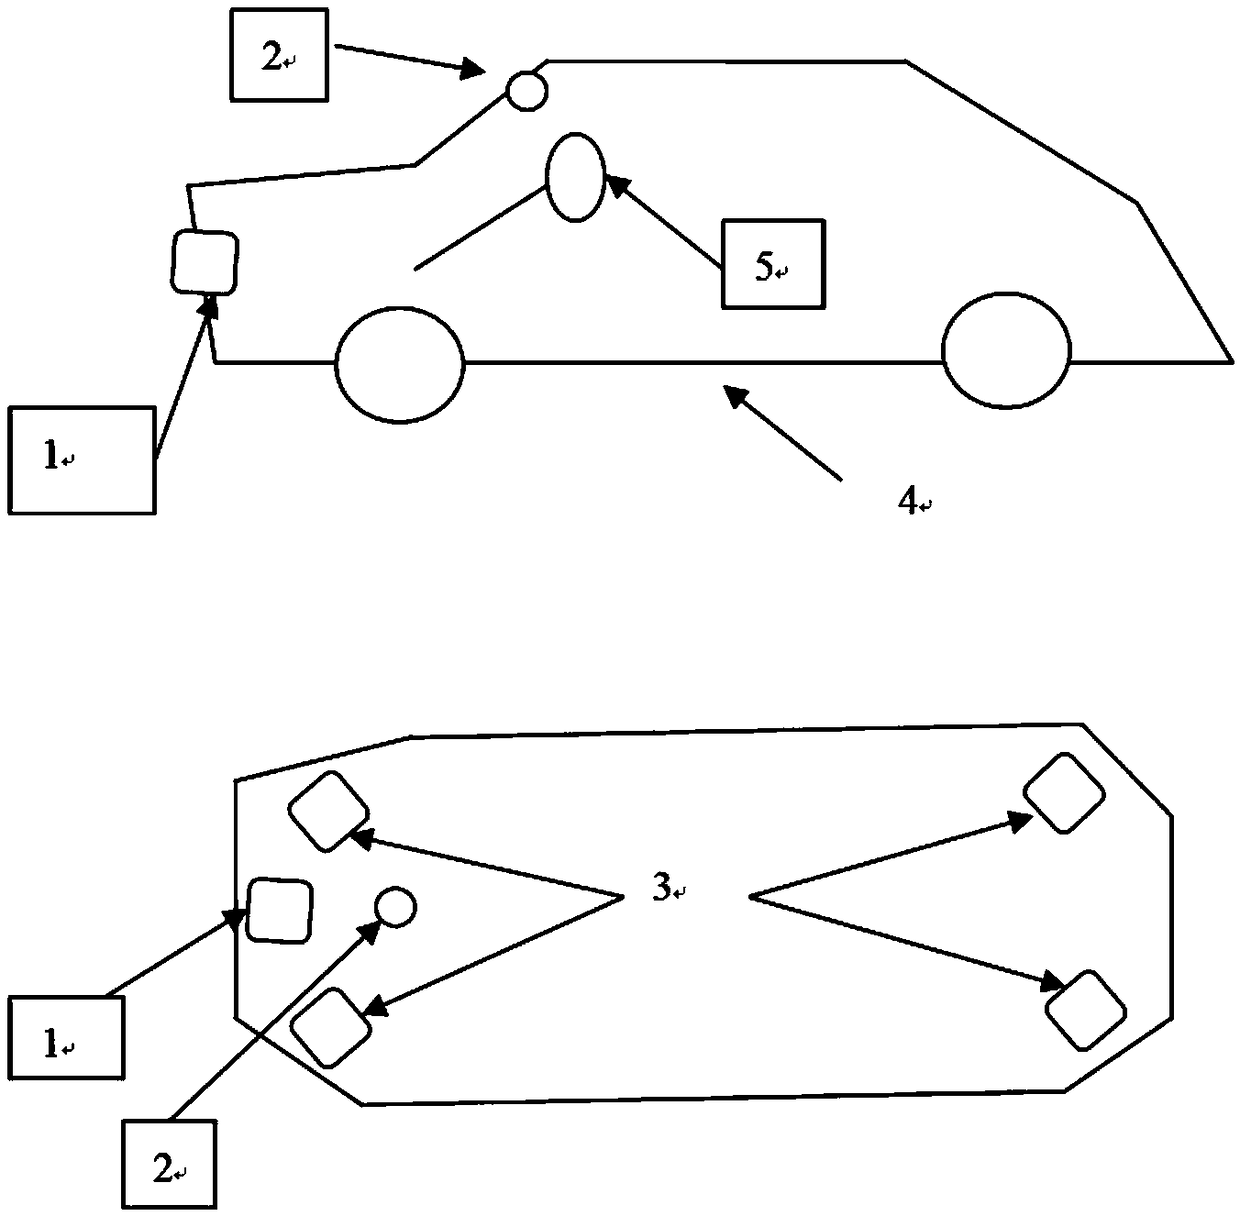 Automatic driving vehicle lane changing method and device, and automatic driving vehicle having the same